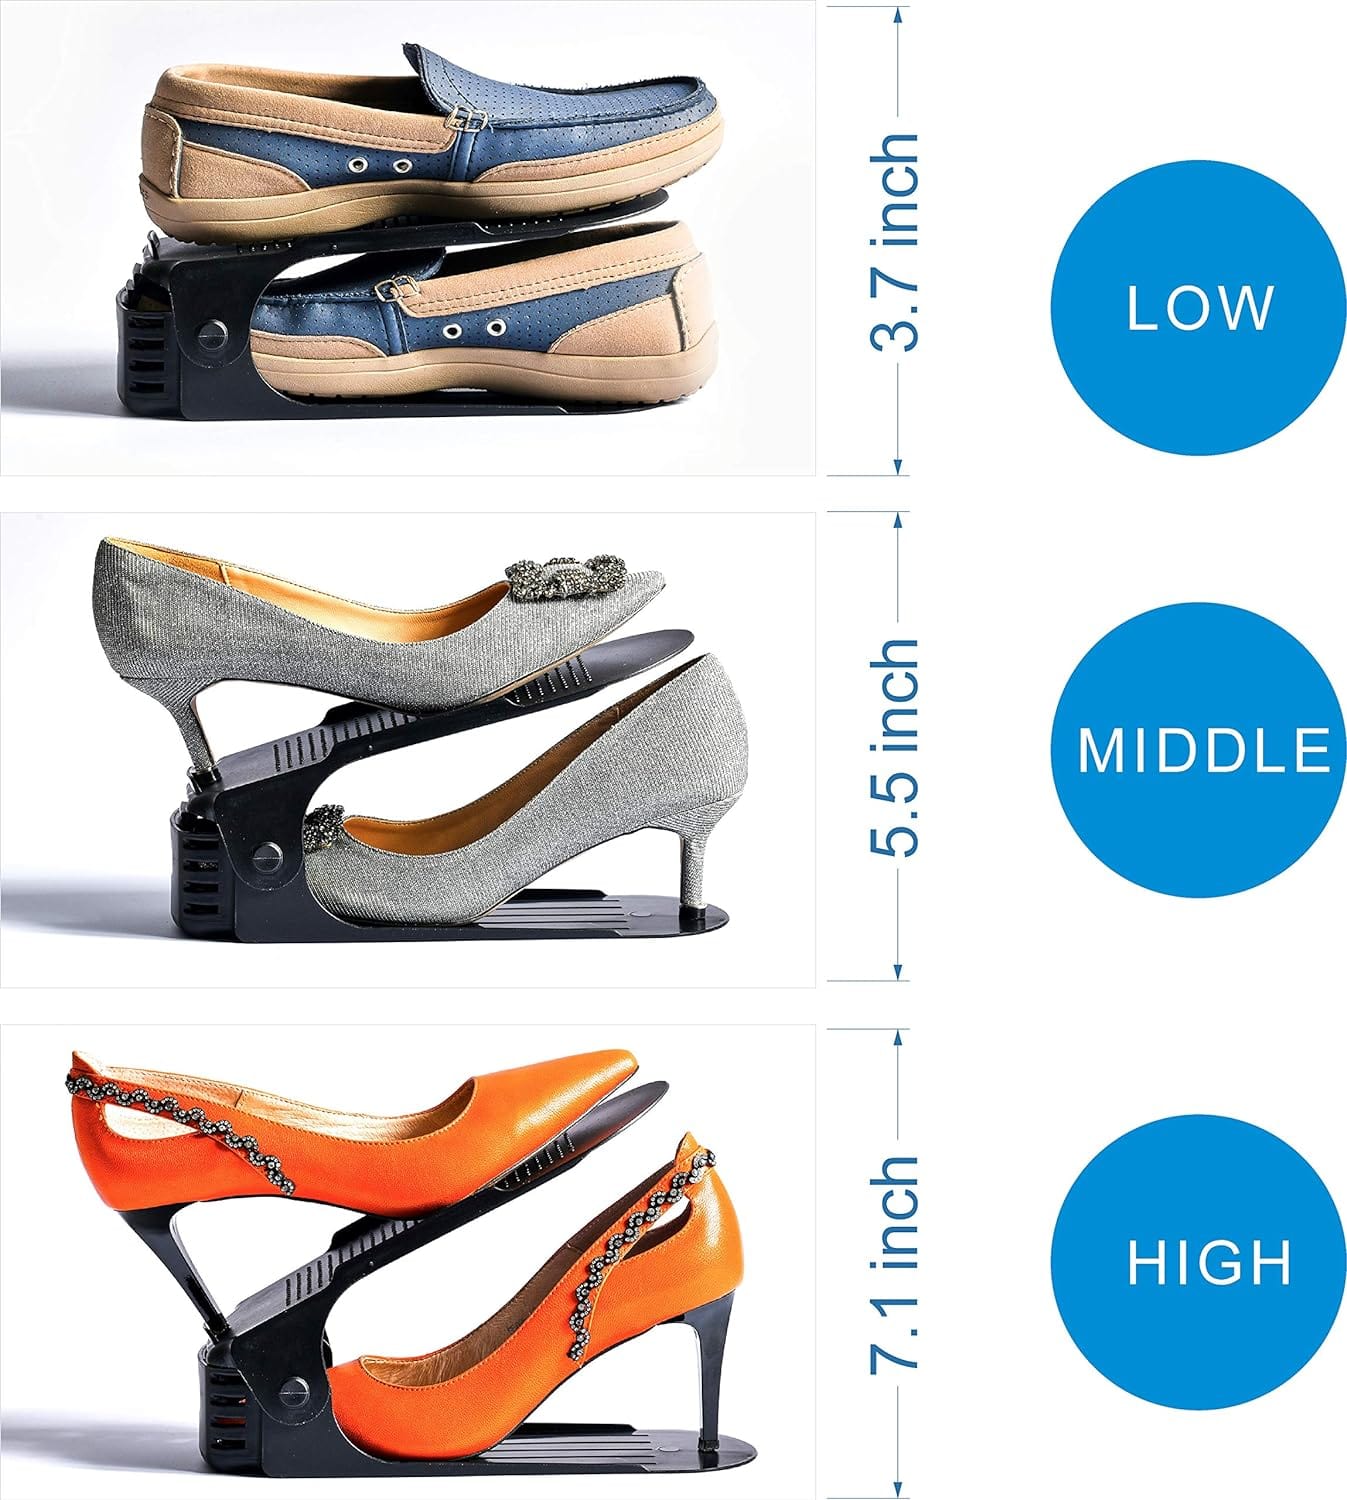 Shoe Organizer - The Adjustable Shoe Rack Space Saver (Black Only) Shoppymize